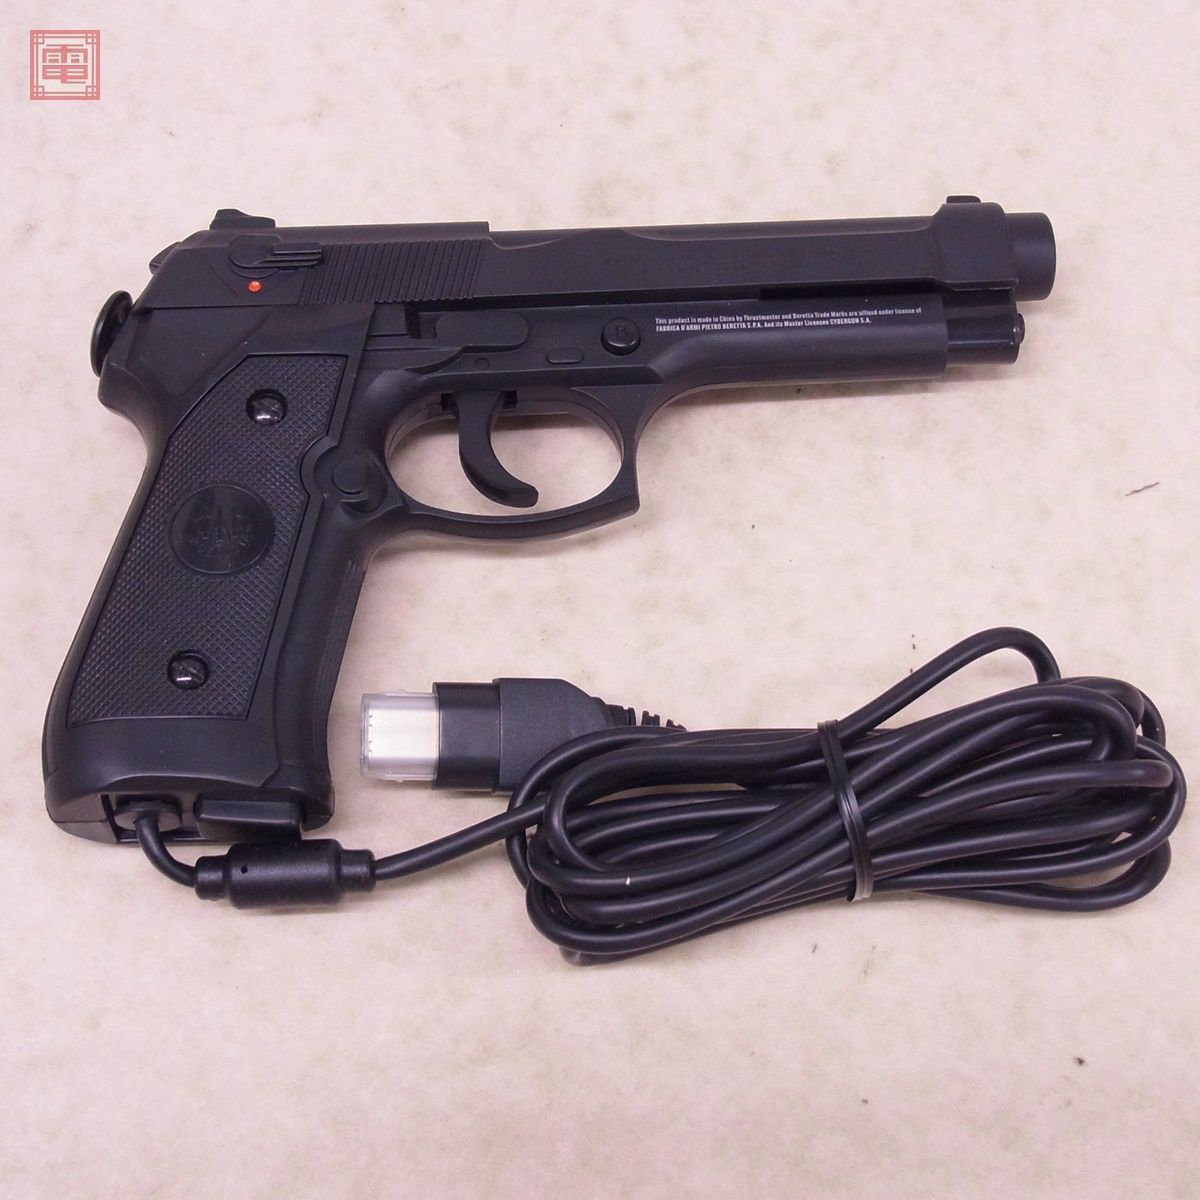 XBOX периферийные устройства Beretta Beretta 92FS gun контроллер gun темно синий тяга тормозные колодки THRUSTMASTER с ящиком [20